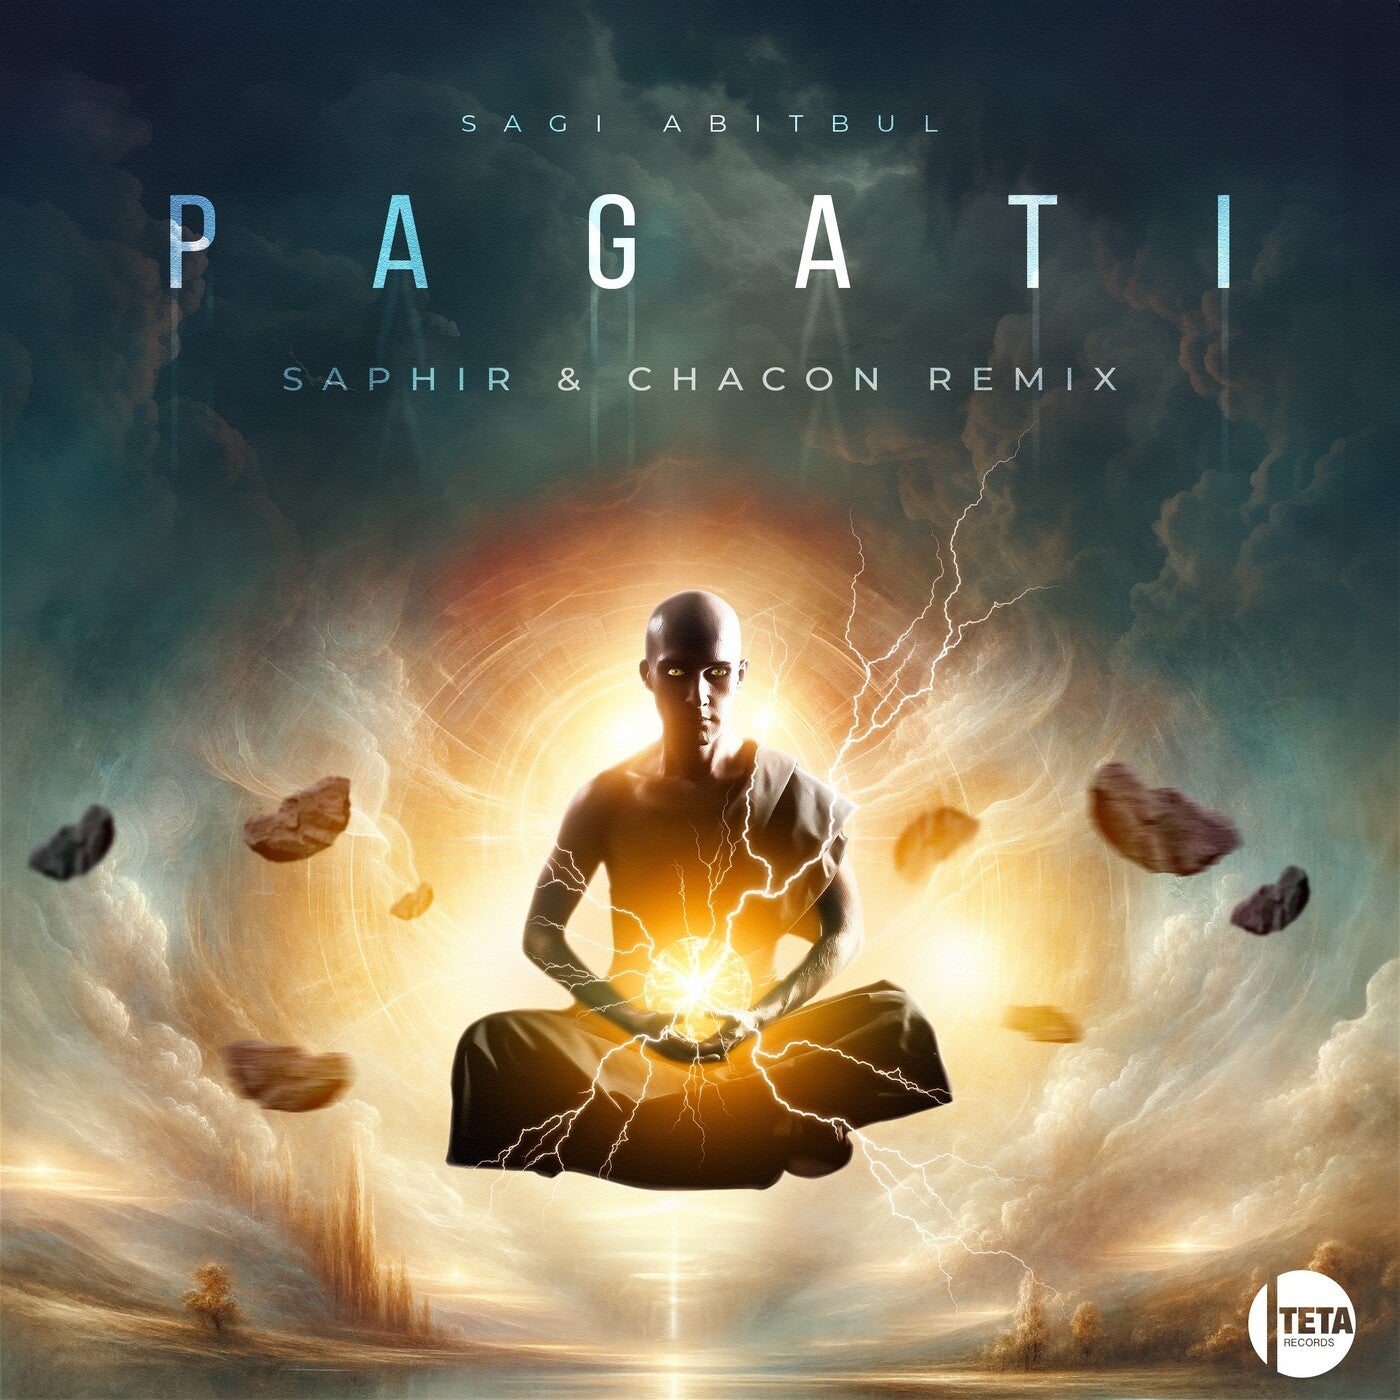 Cover - Sagi Abitbul - Pagati (Saphir & Chacón Remix)